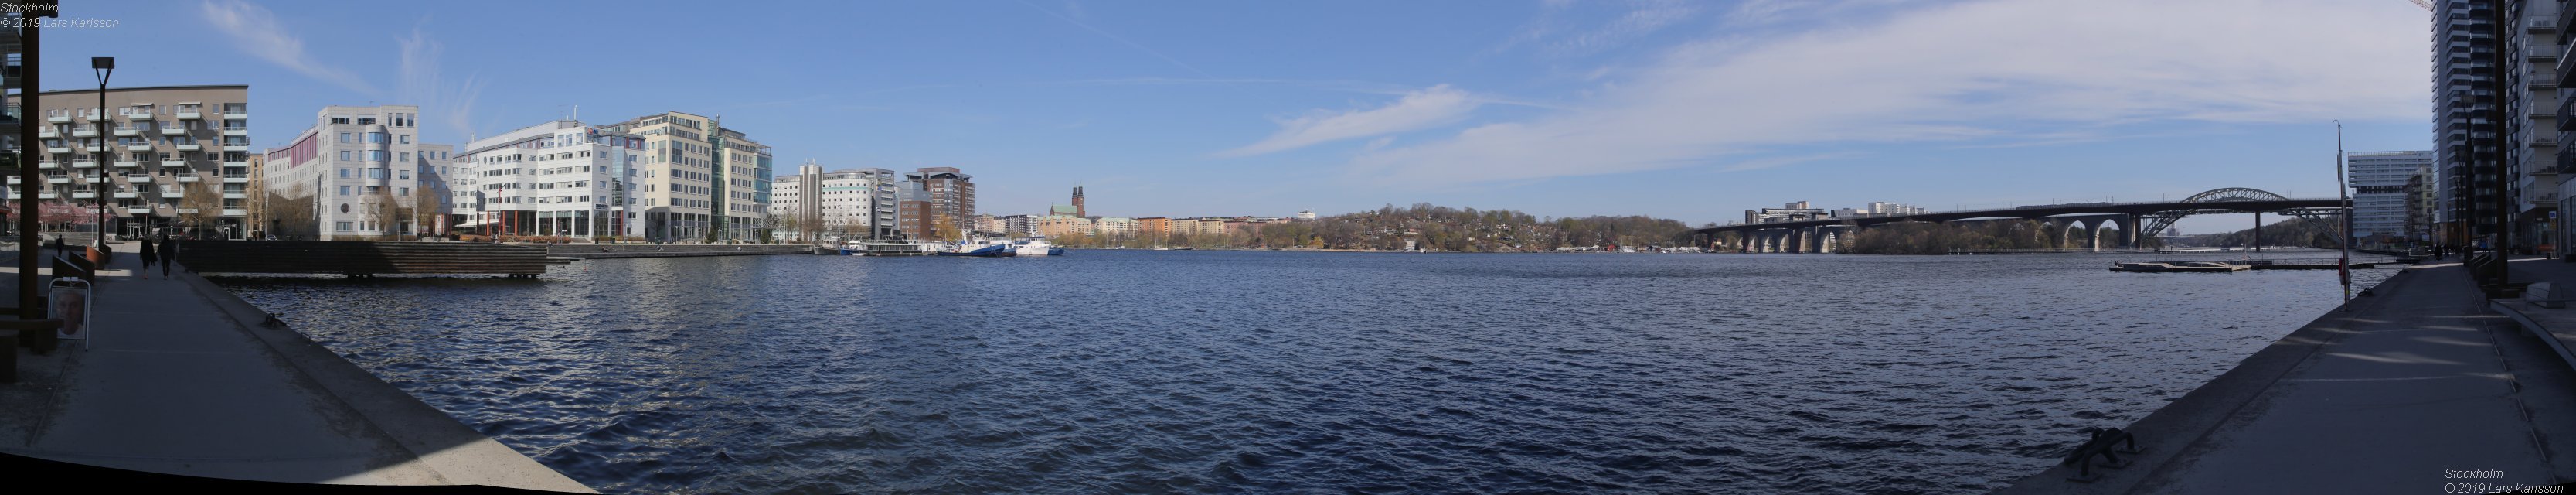 Walks along Stockholm City's harbors: From Årstadal to Eriksdal, 2019